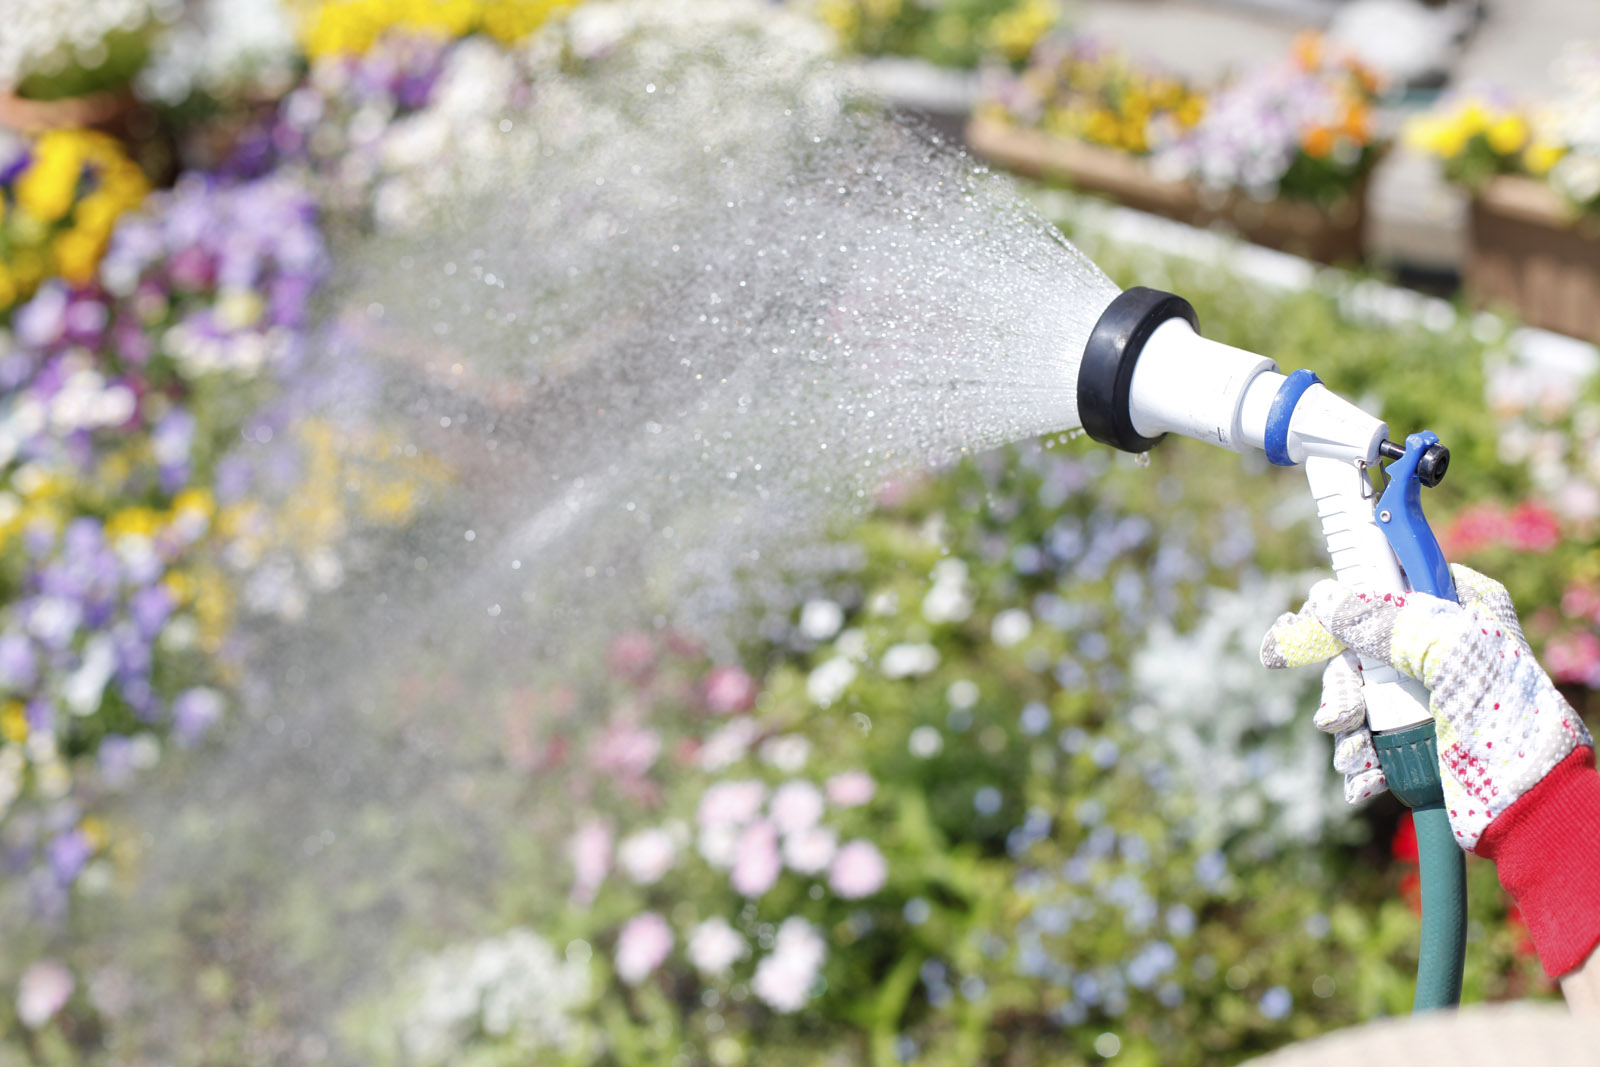 Gardening watering, garden hose, flowers, spring, yardwork, gifts for gardeners